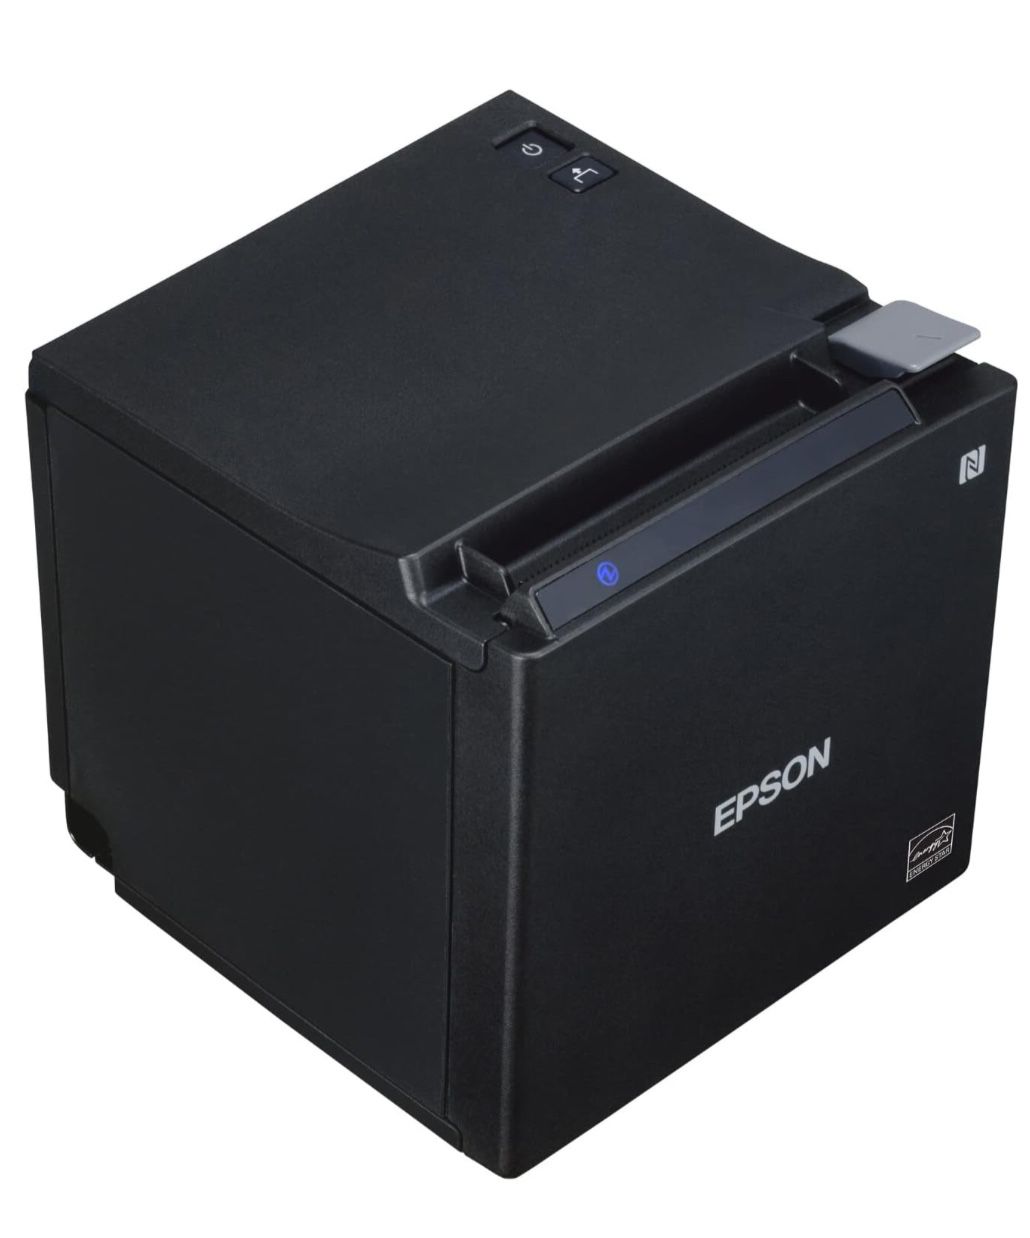 Epson C31CE95022 Series TM-M30 Thermal Receipt Printer, Autocutter, USB, Ethernet, Energy Star, Black